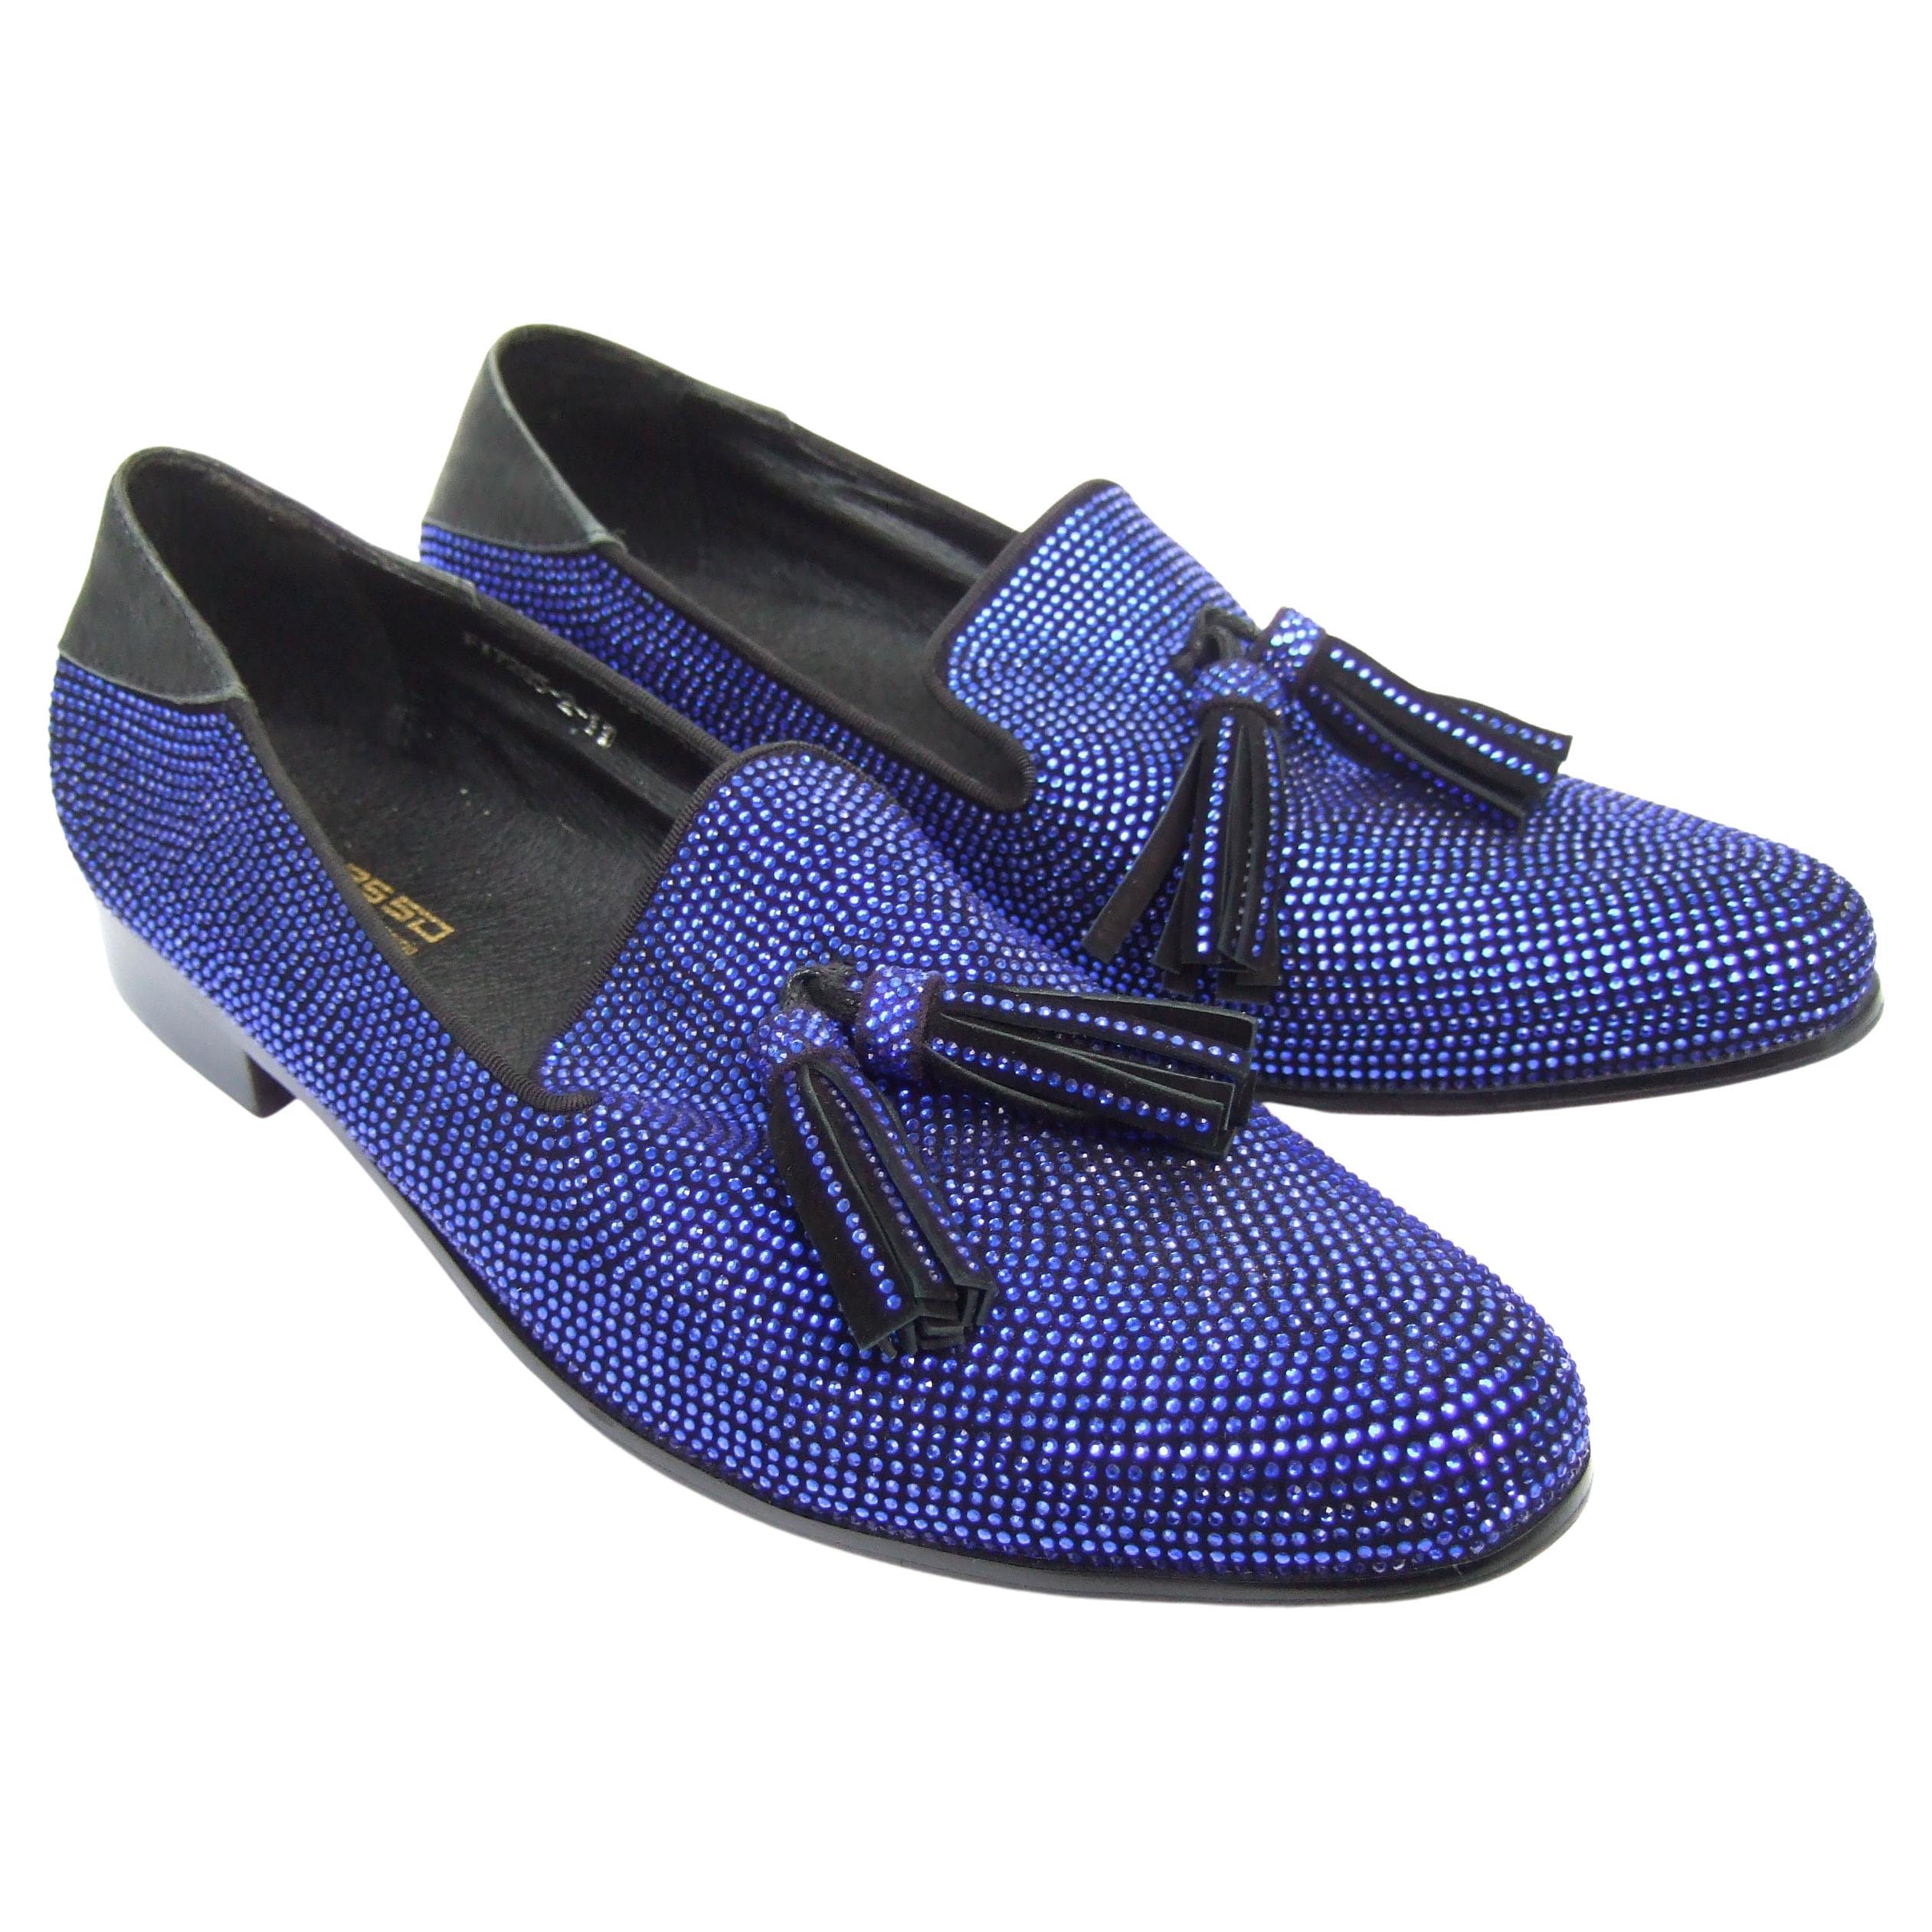 Men's Cobalt Blue Jeweled Crystal Tassel Slipper Dress Shoes Size 11 21st c 5